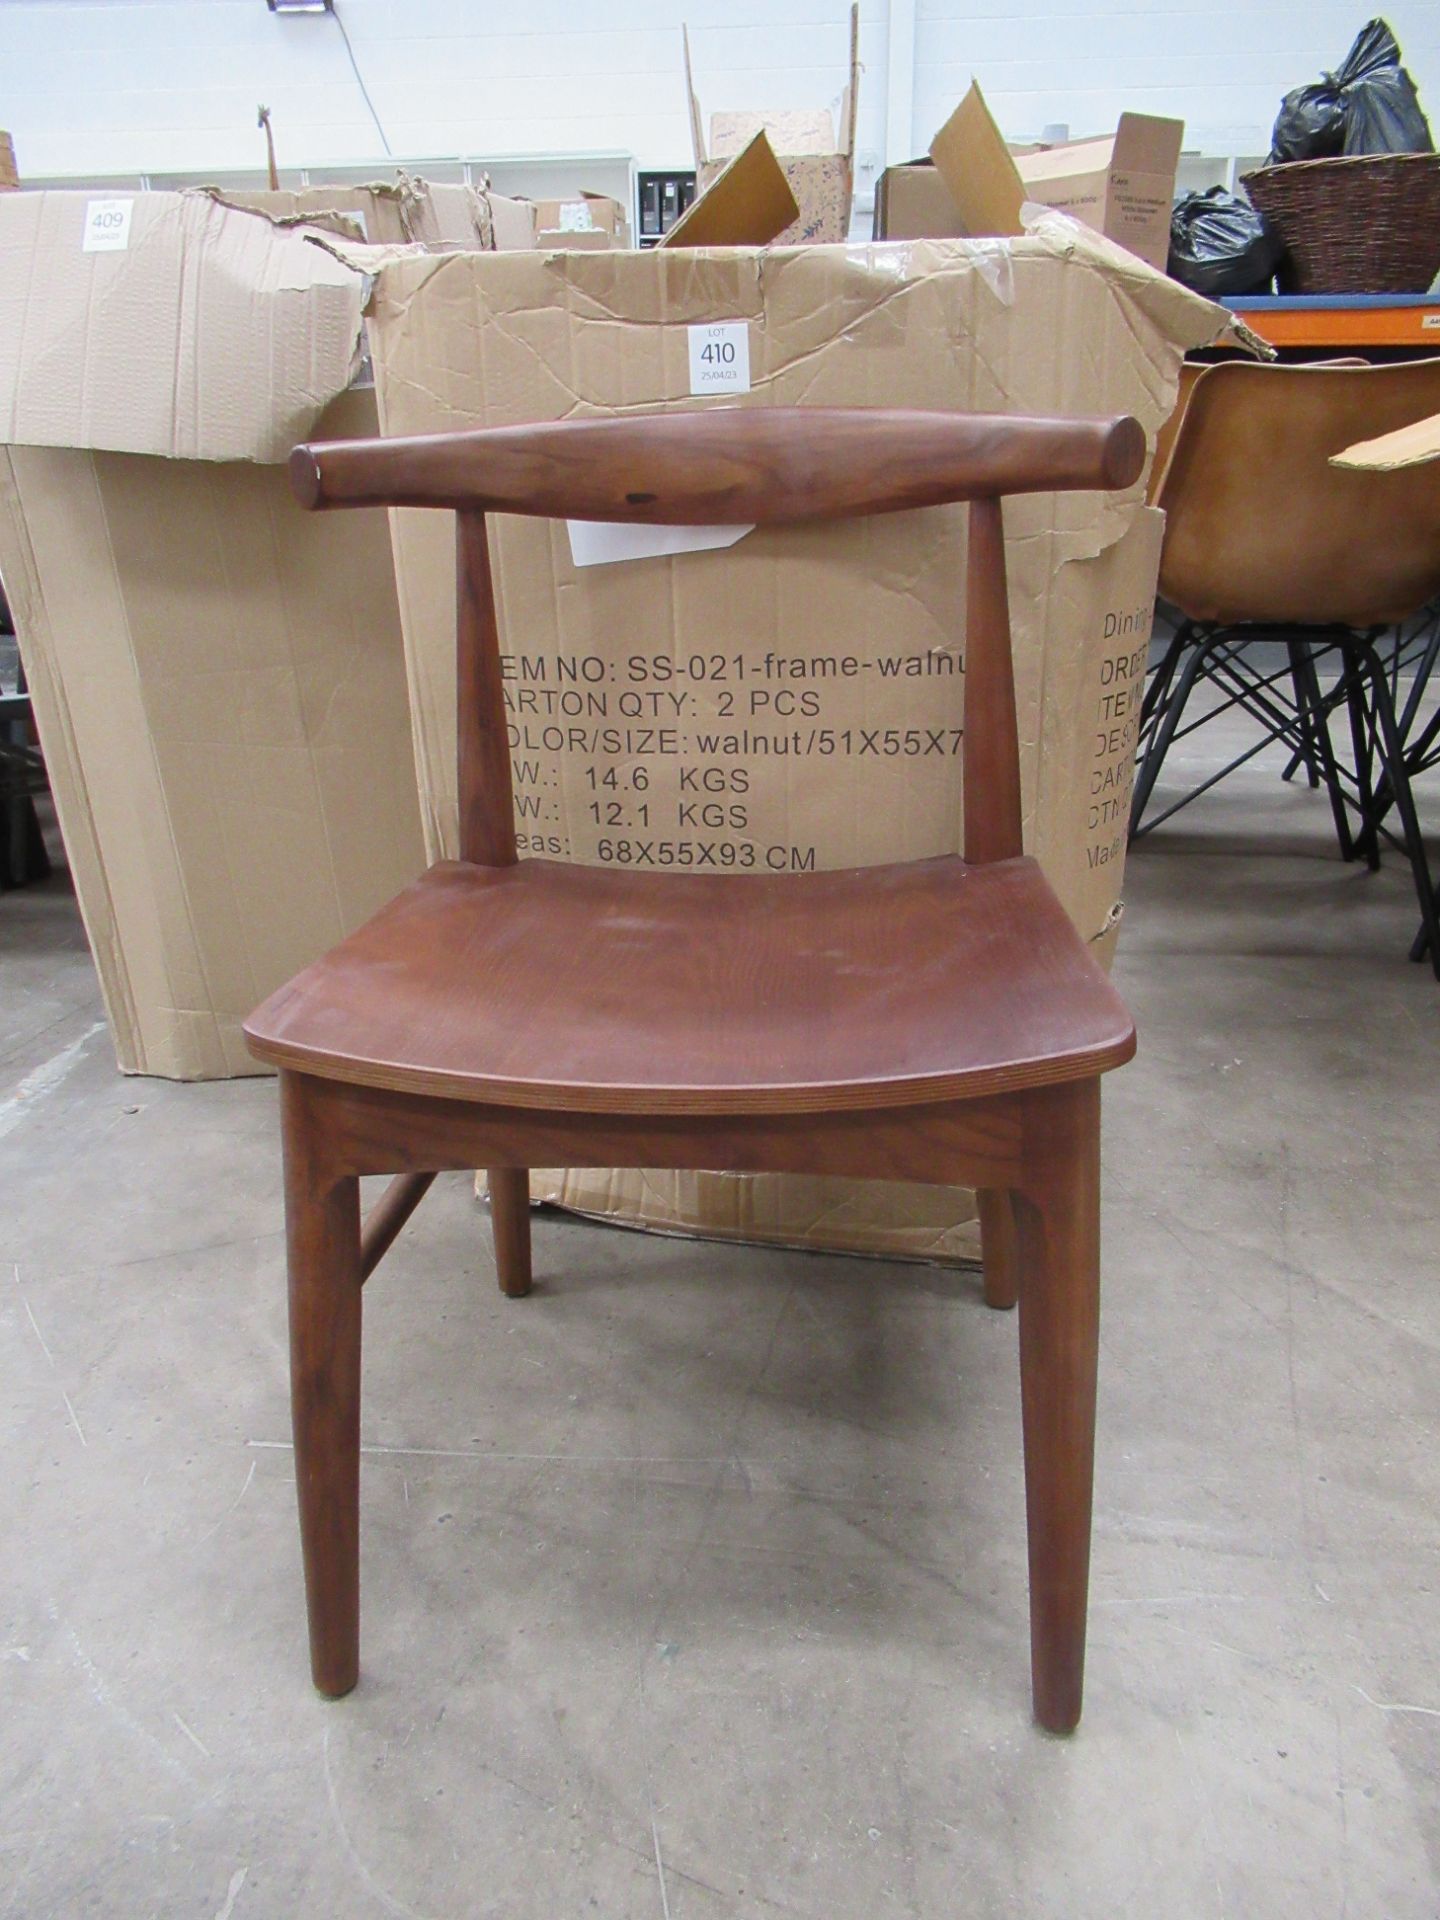 2x Cow Horn Chair Frames - colour Walnut - Image 2 of 3